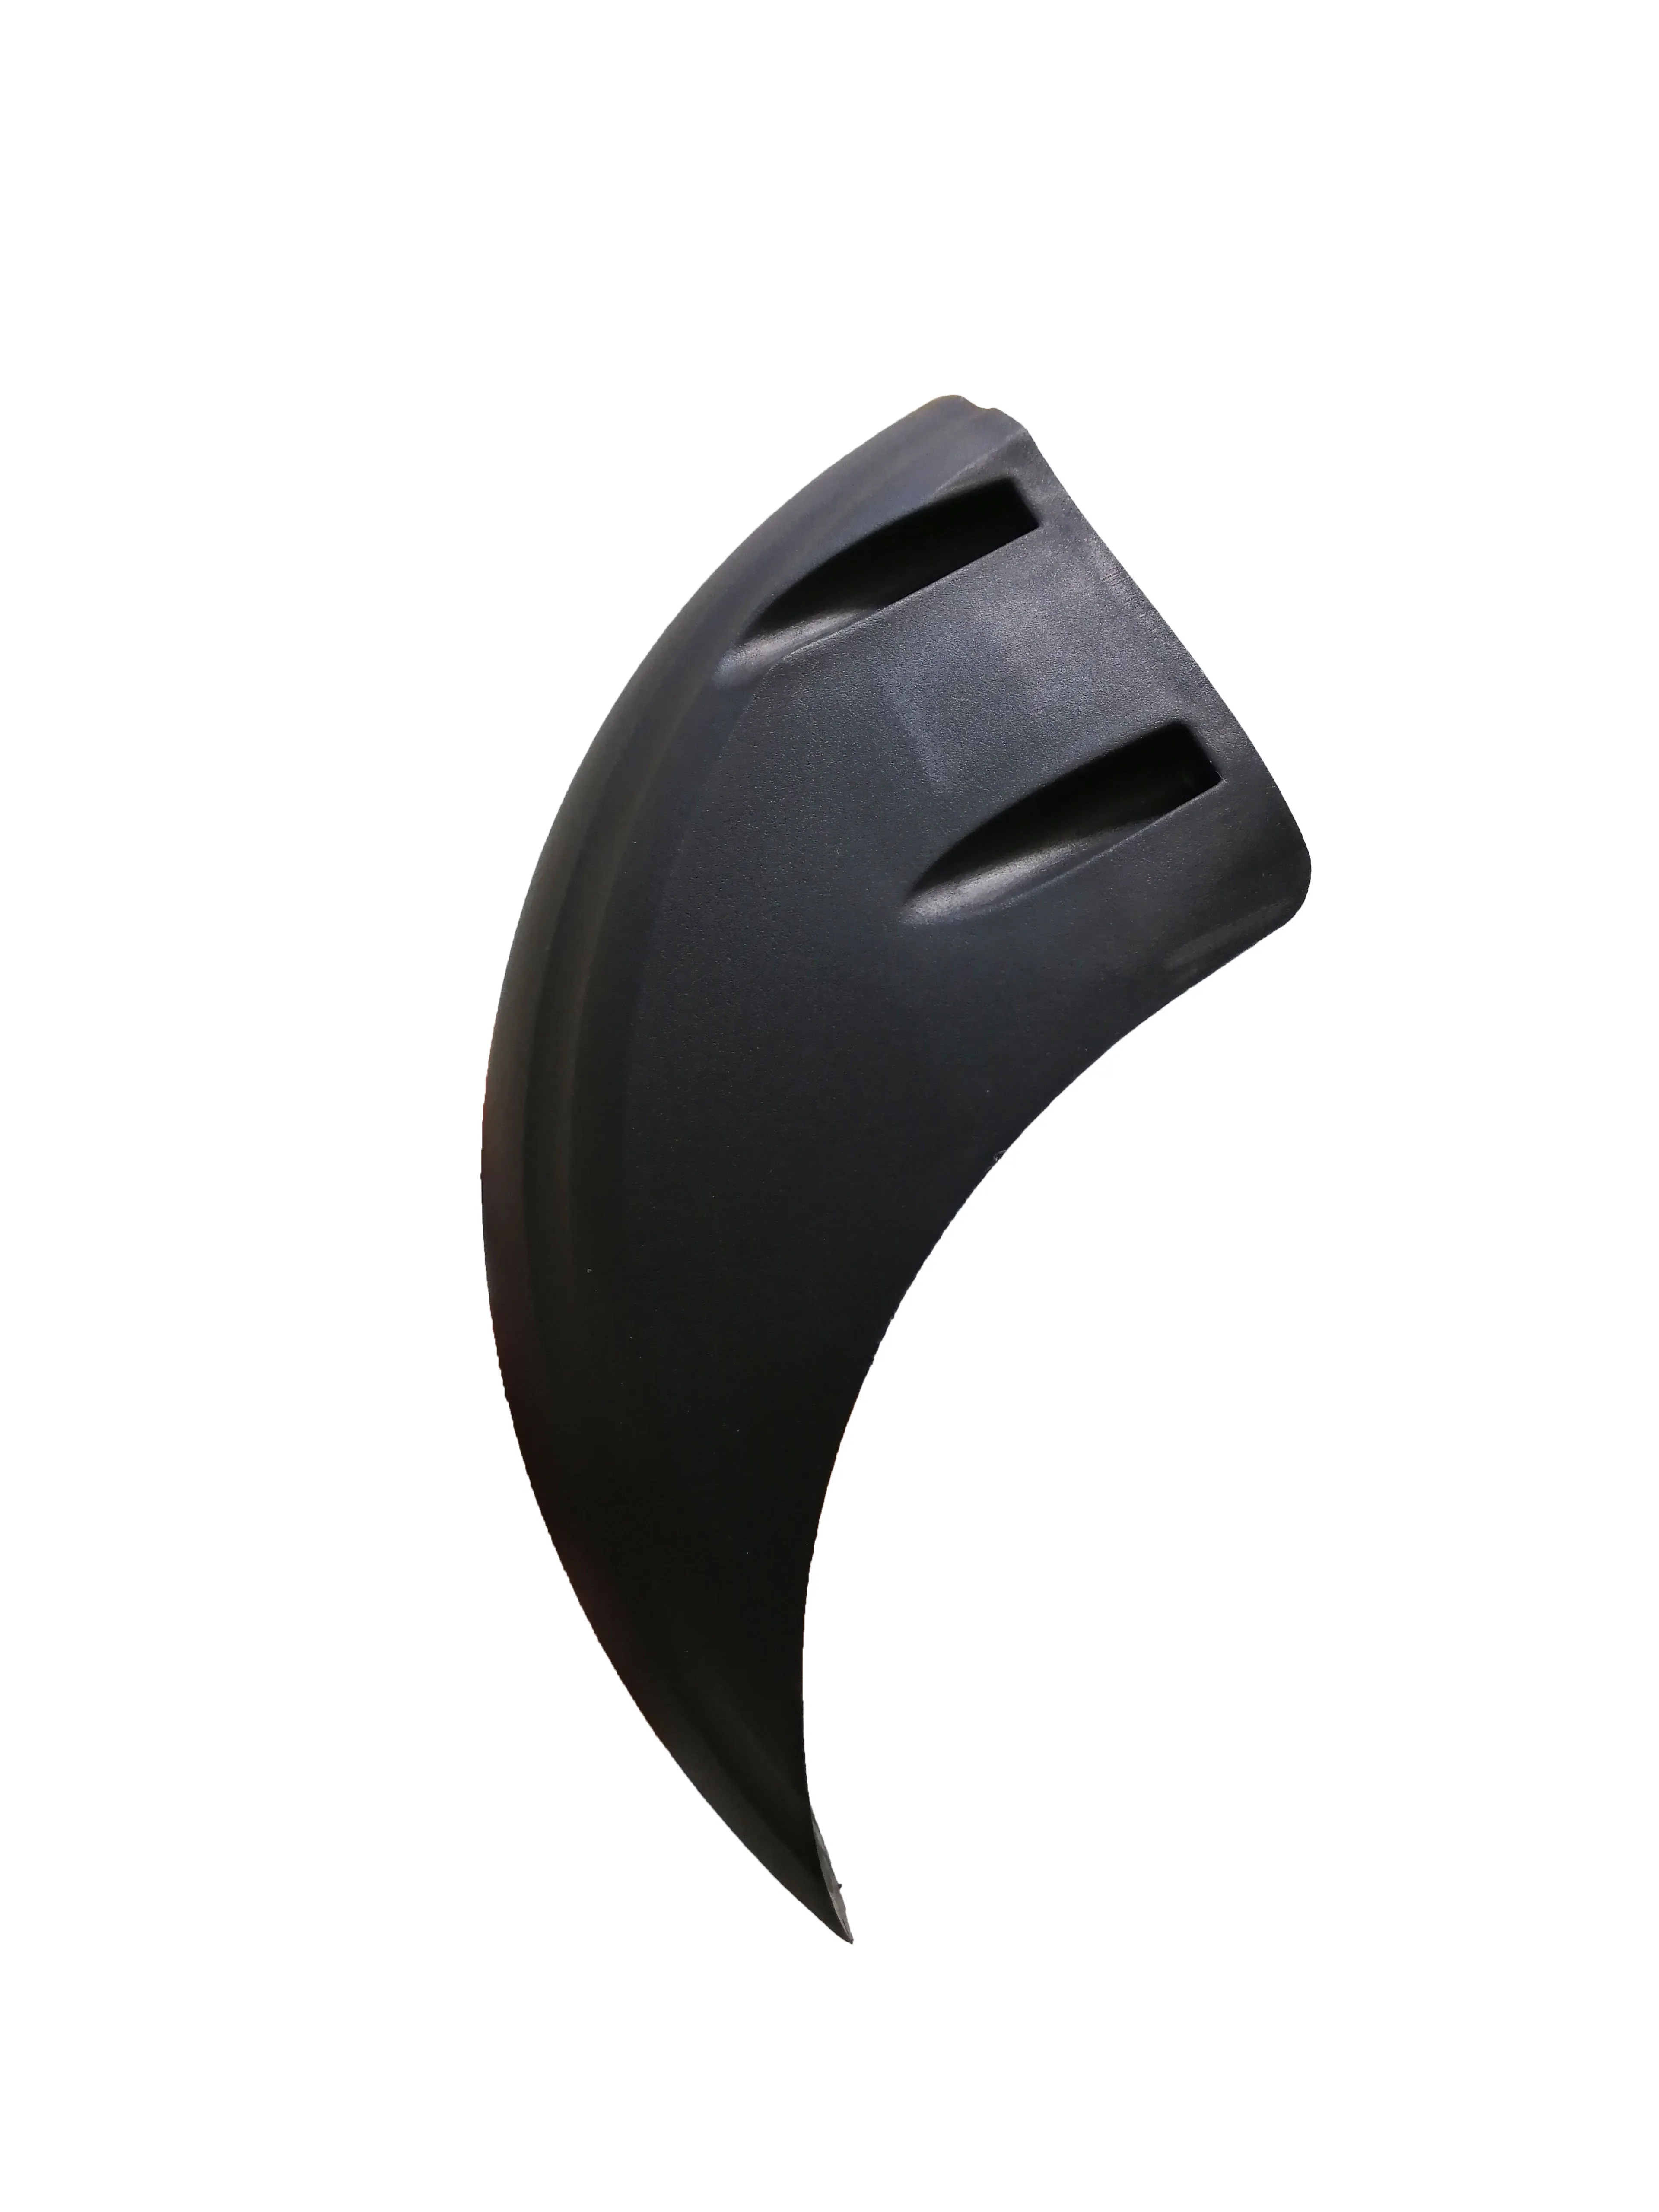 Крыло для SPEEDWAY LEGER электрический скутер RUIMA MINI5 скутер брызговик - Цвет: Черный